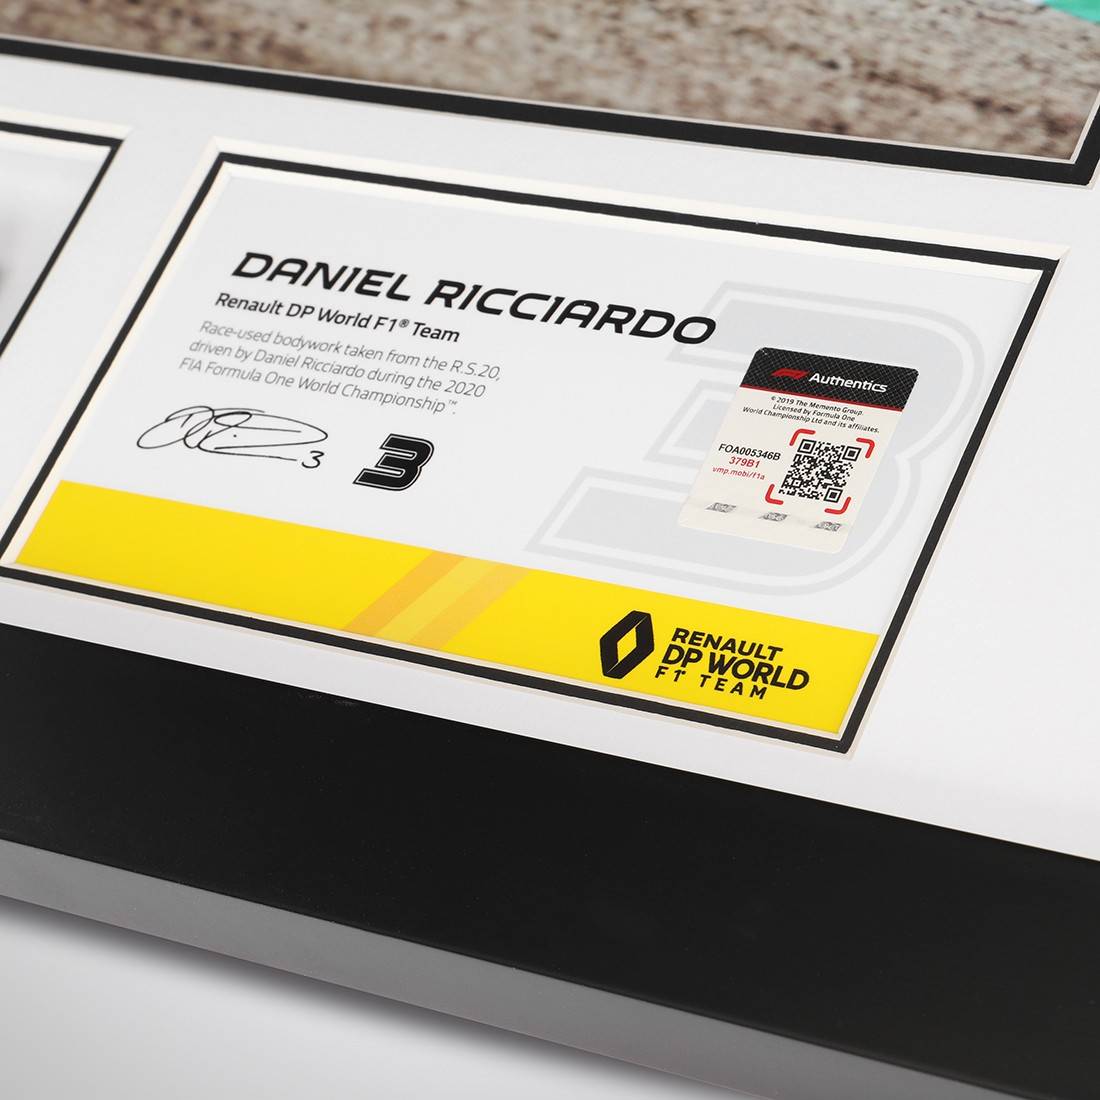 Daniel Ricciardo 2020 Bodywork & Photo - Imola GP